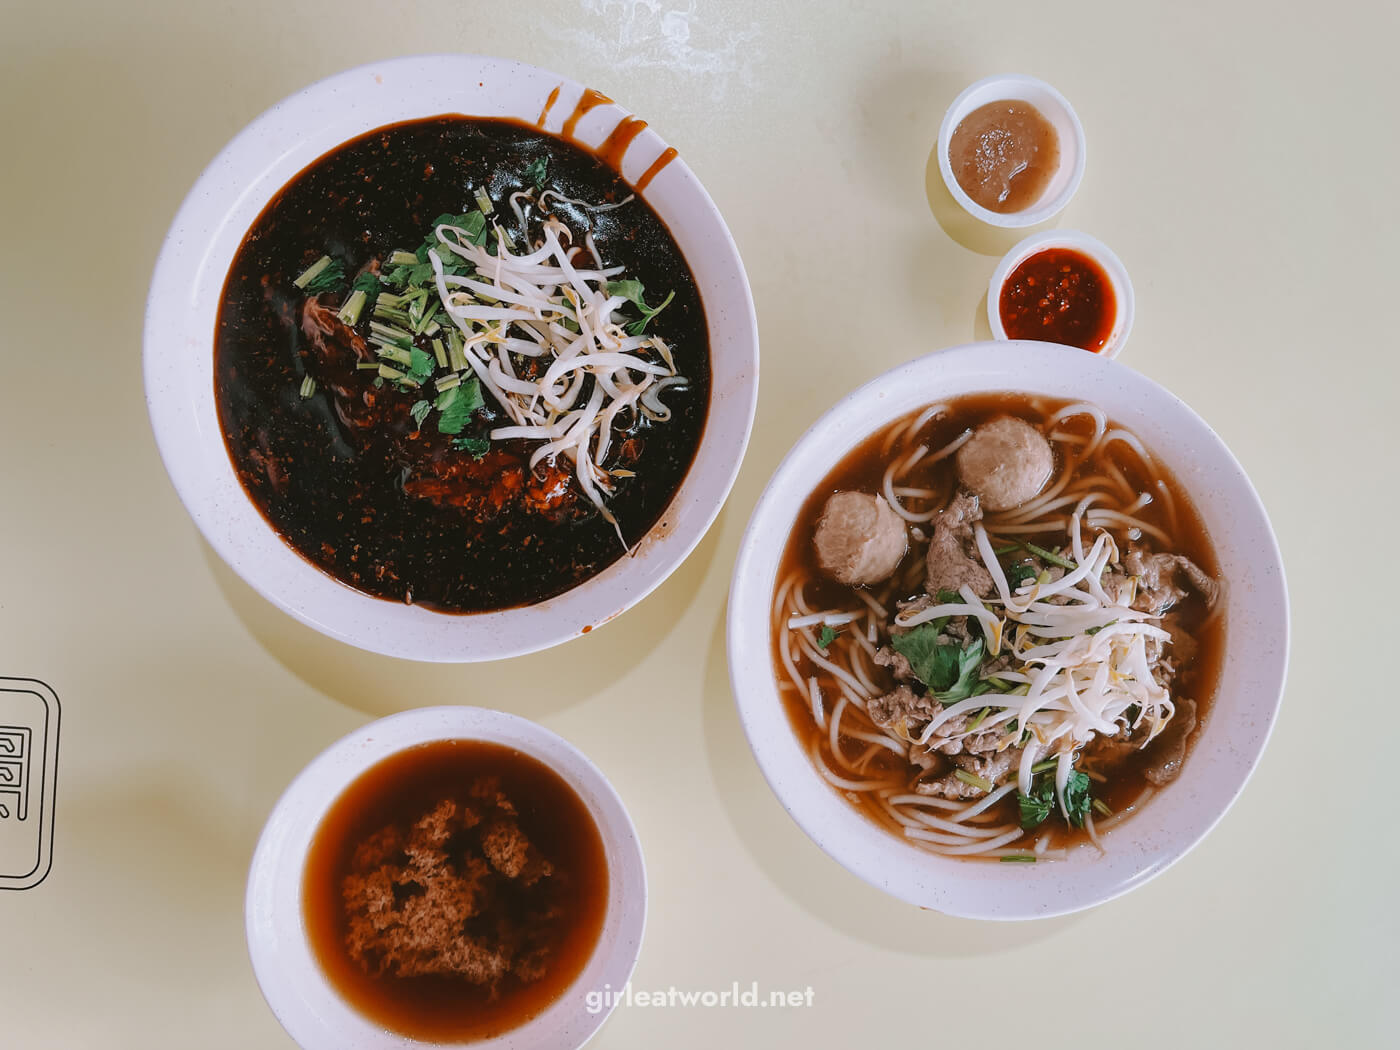 Singapore Food - Beef Noodles